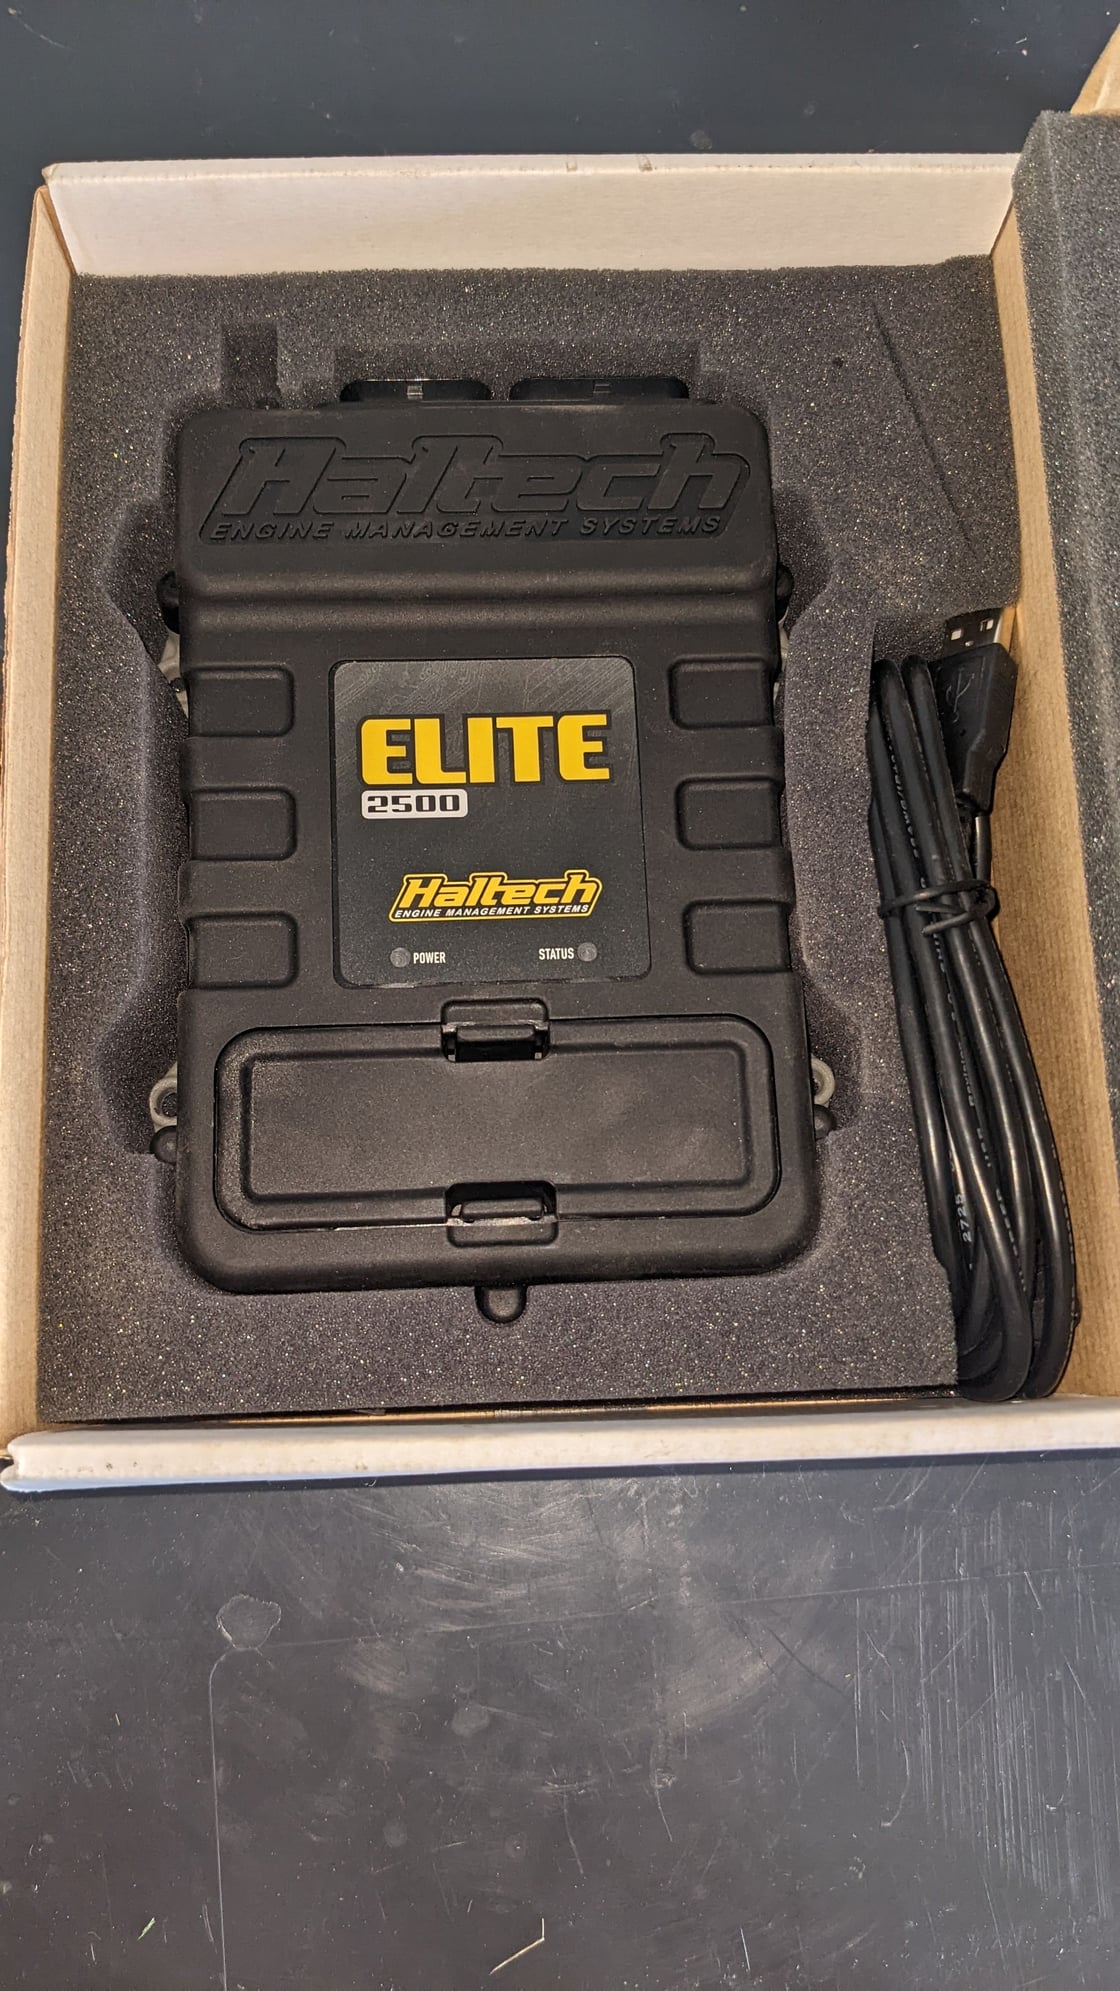 Engine - Electrical - Haltech Elite 2500 + Premium Universal 8ft Harness - New - 0  All Models - Winneconne, WI 54986, United States